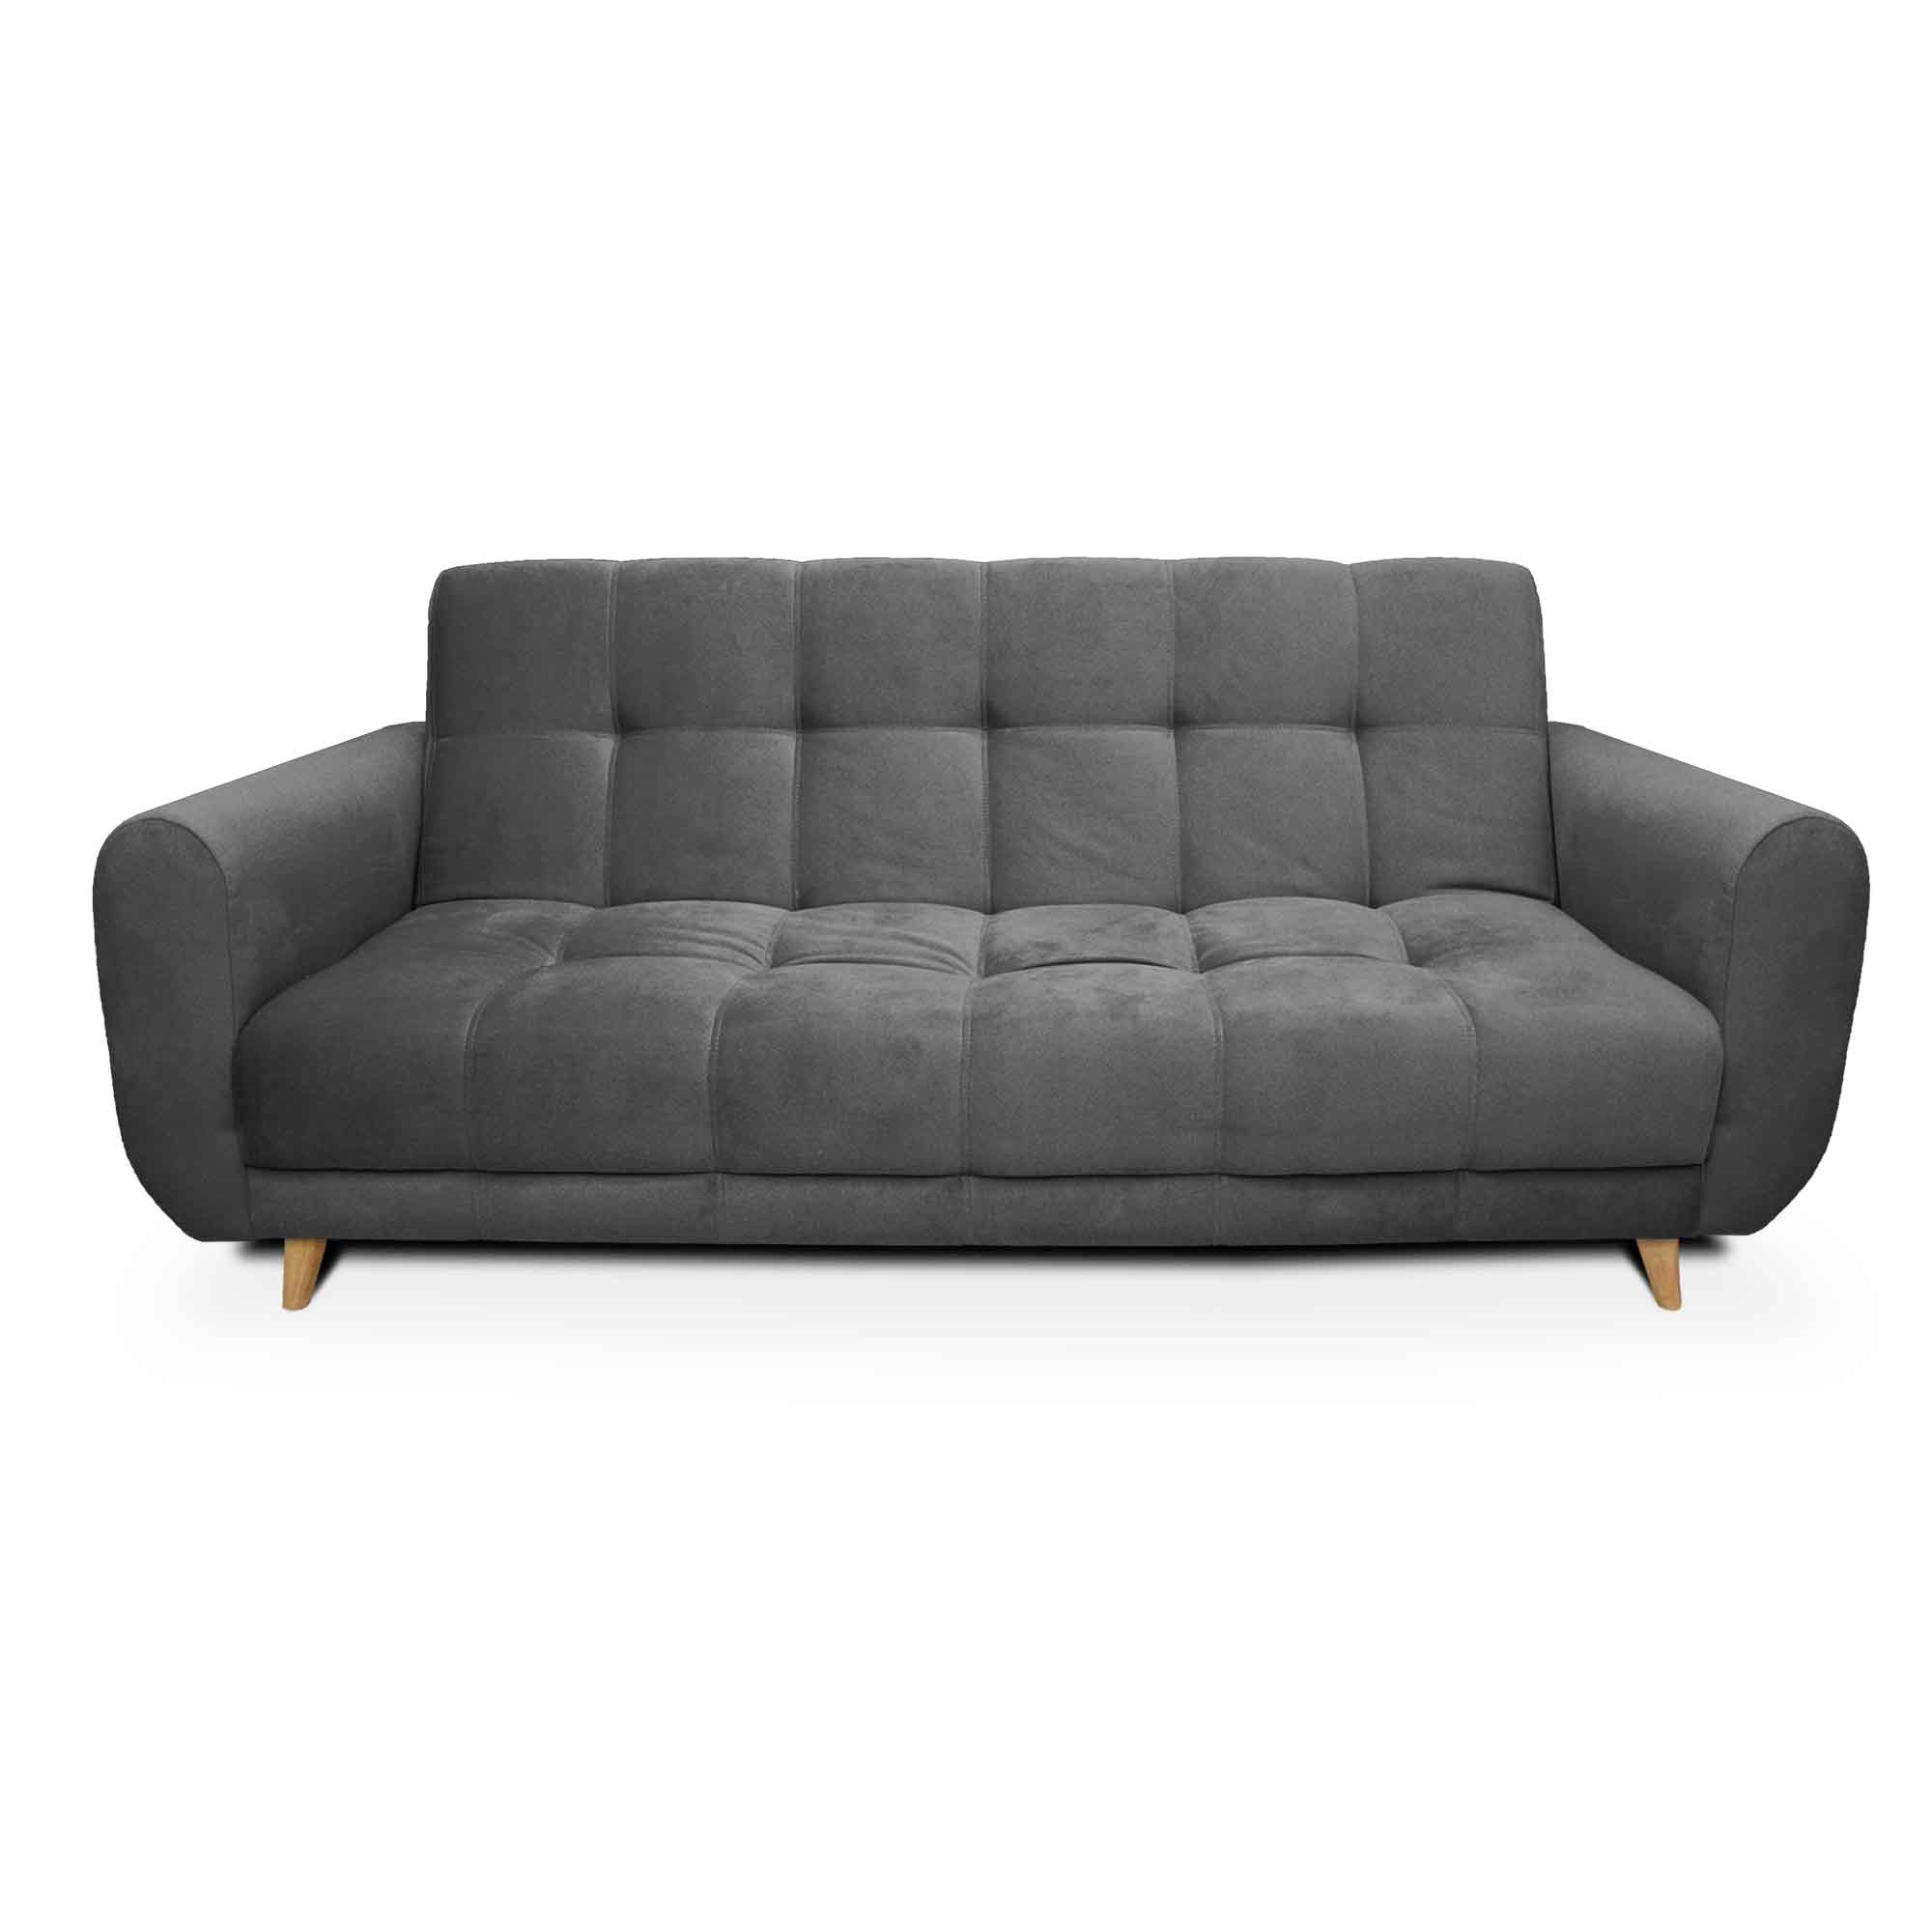 Sofa Cama Comfort Sistema Clic Clac Color Gris